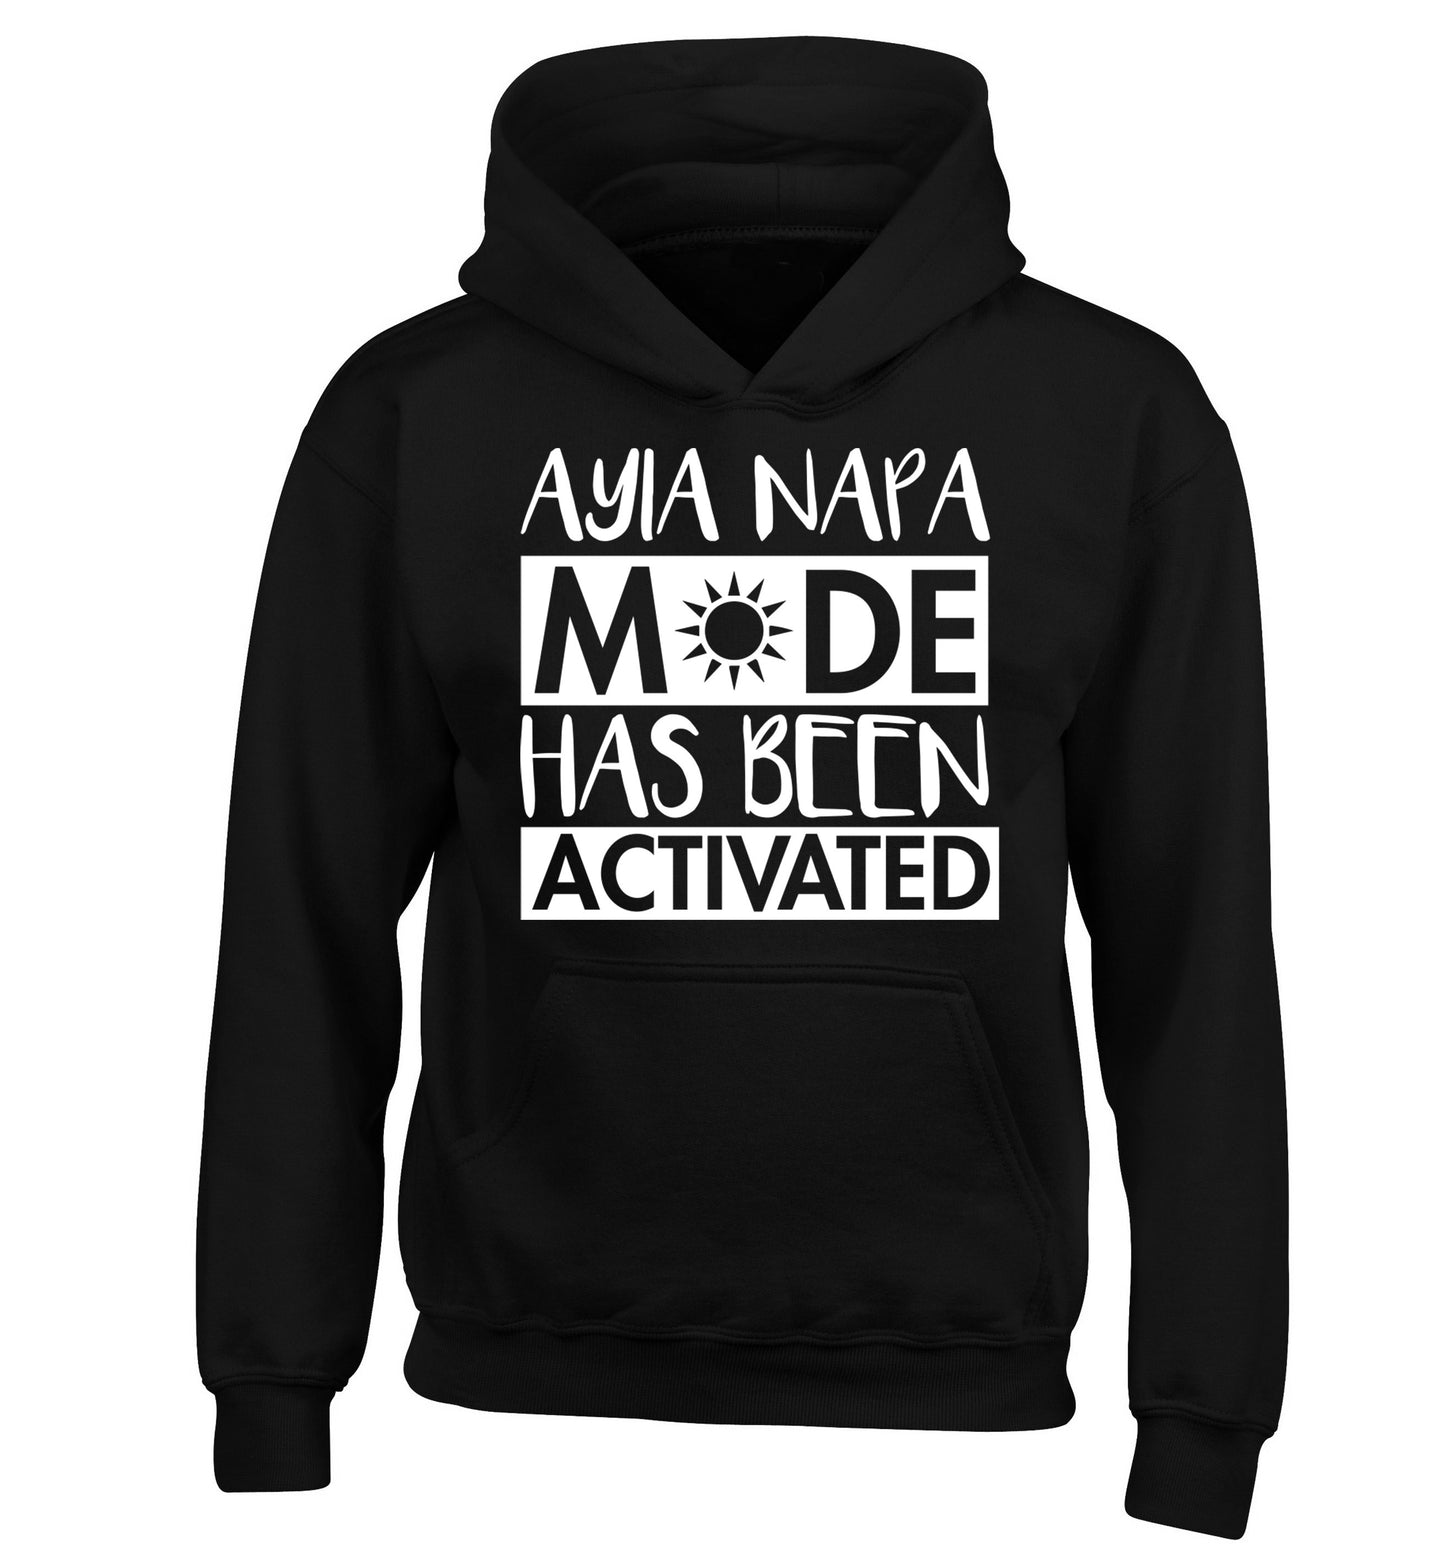 Aiya Napa mode has been activated children's black hoodie 12-14 Years